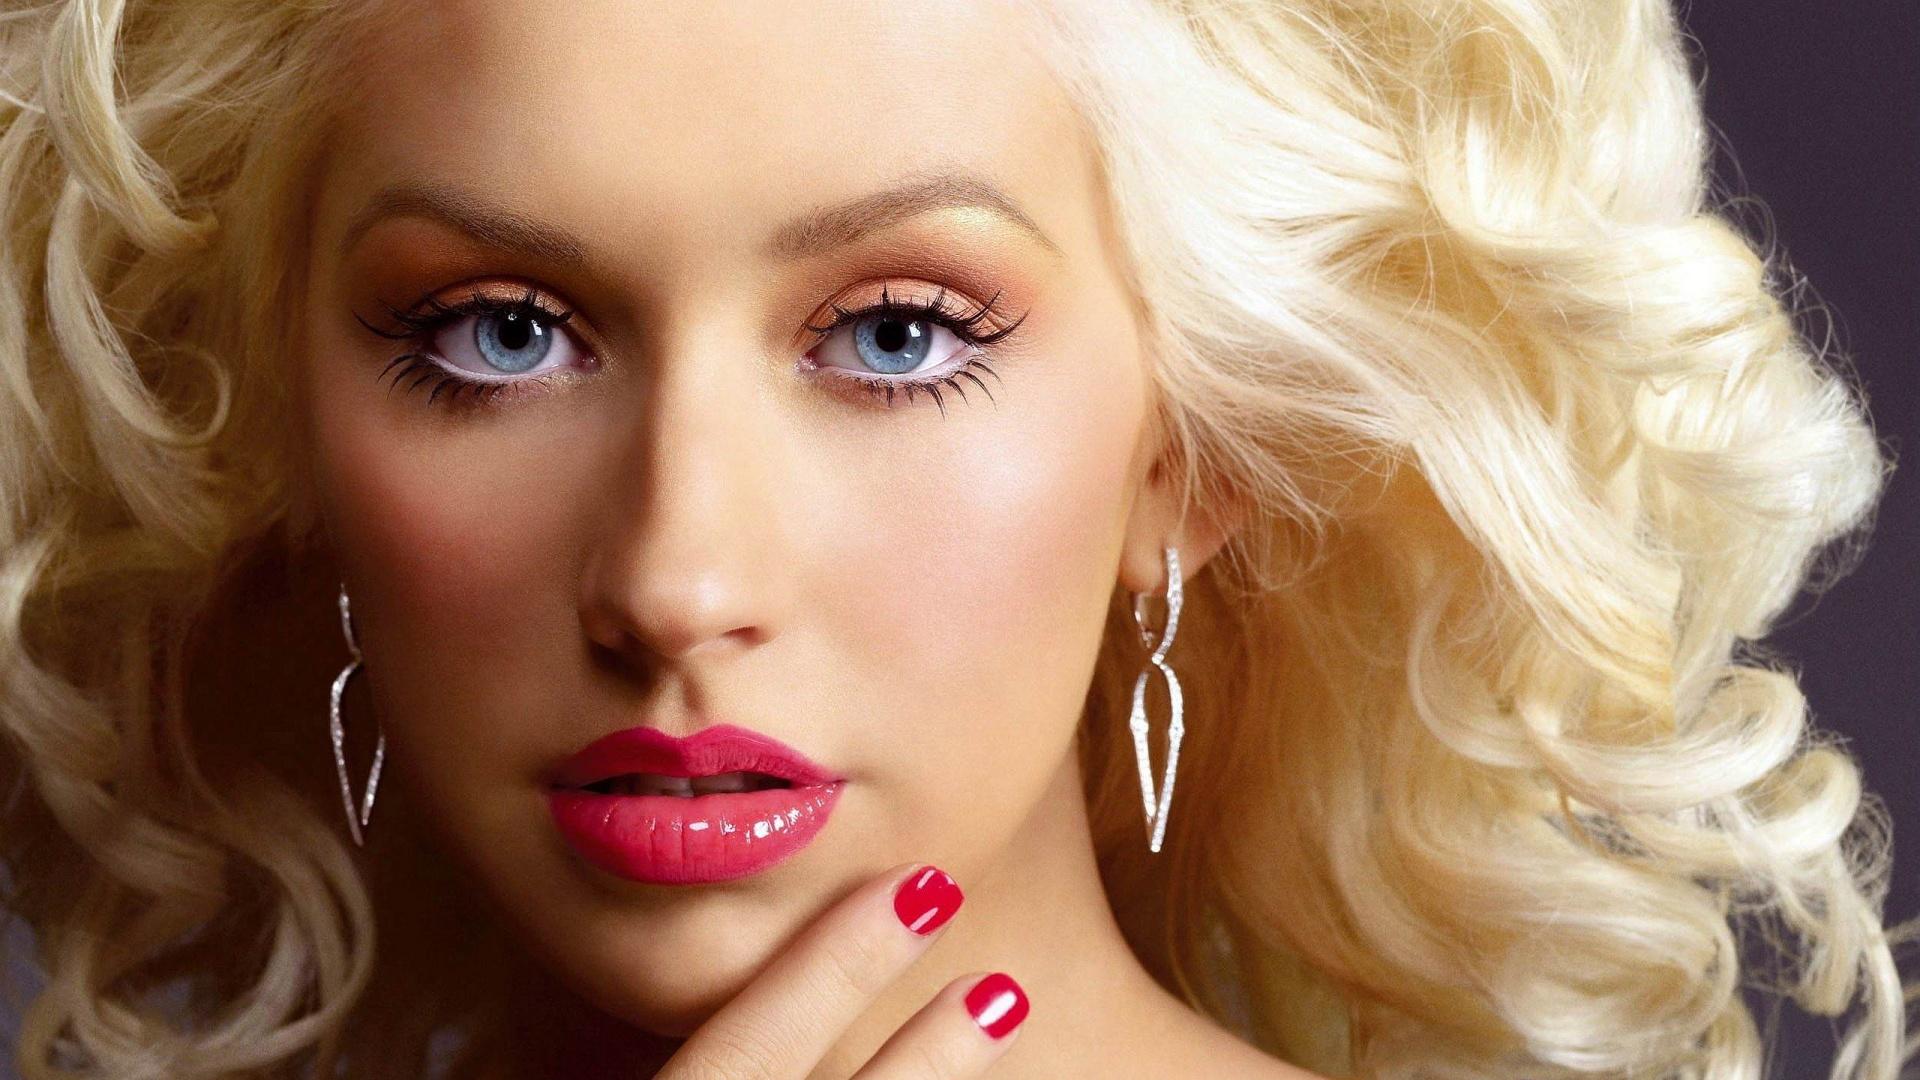 Christina Aguilera Wallpaper High Quality